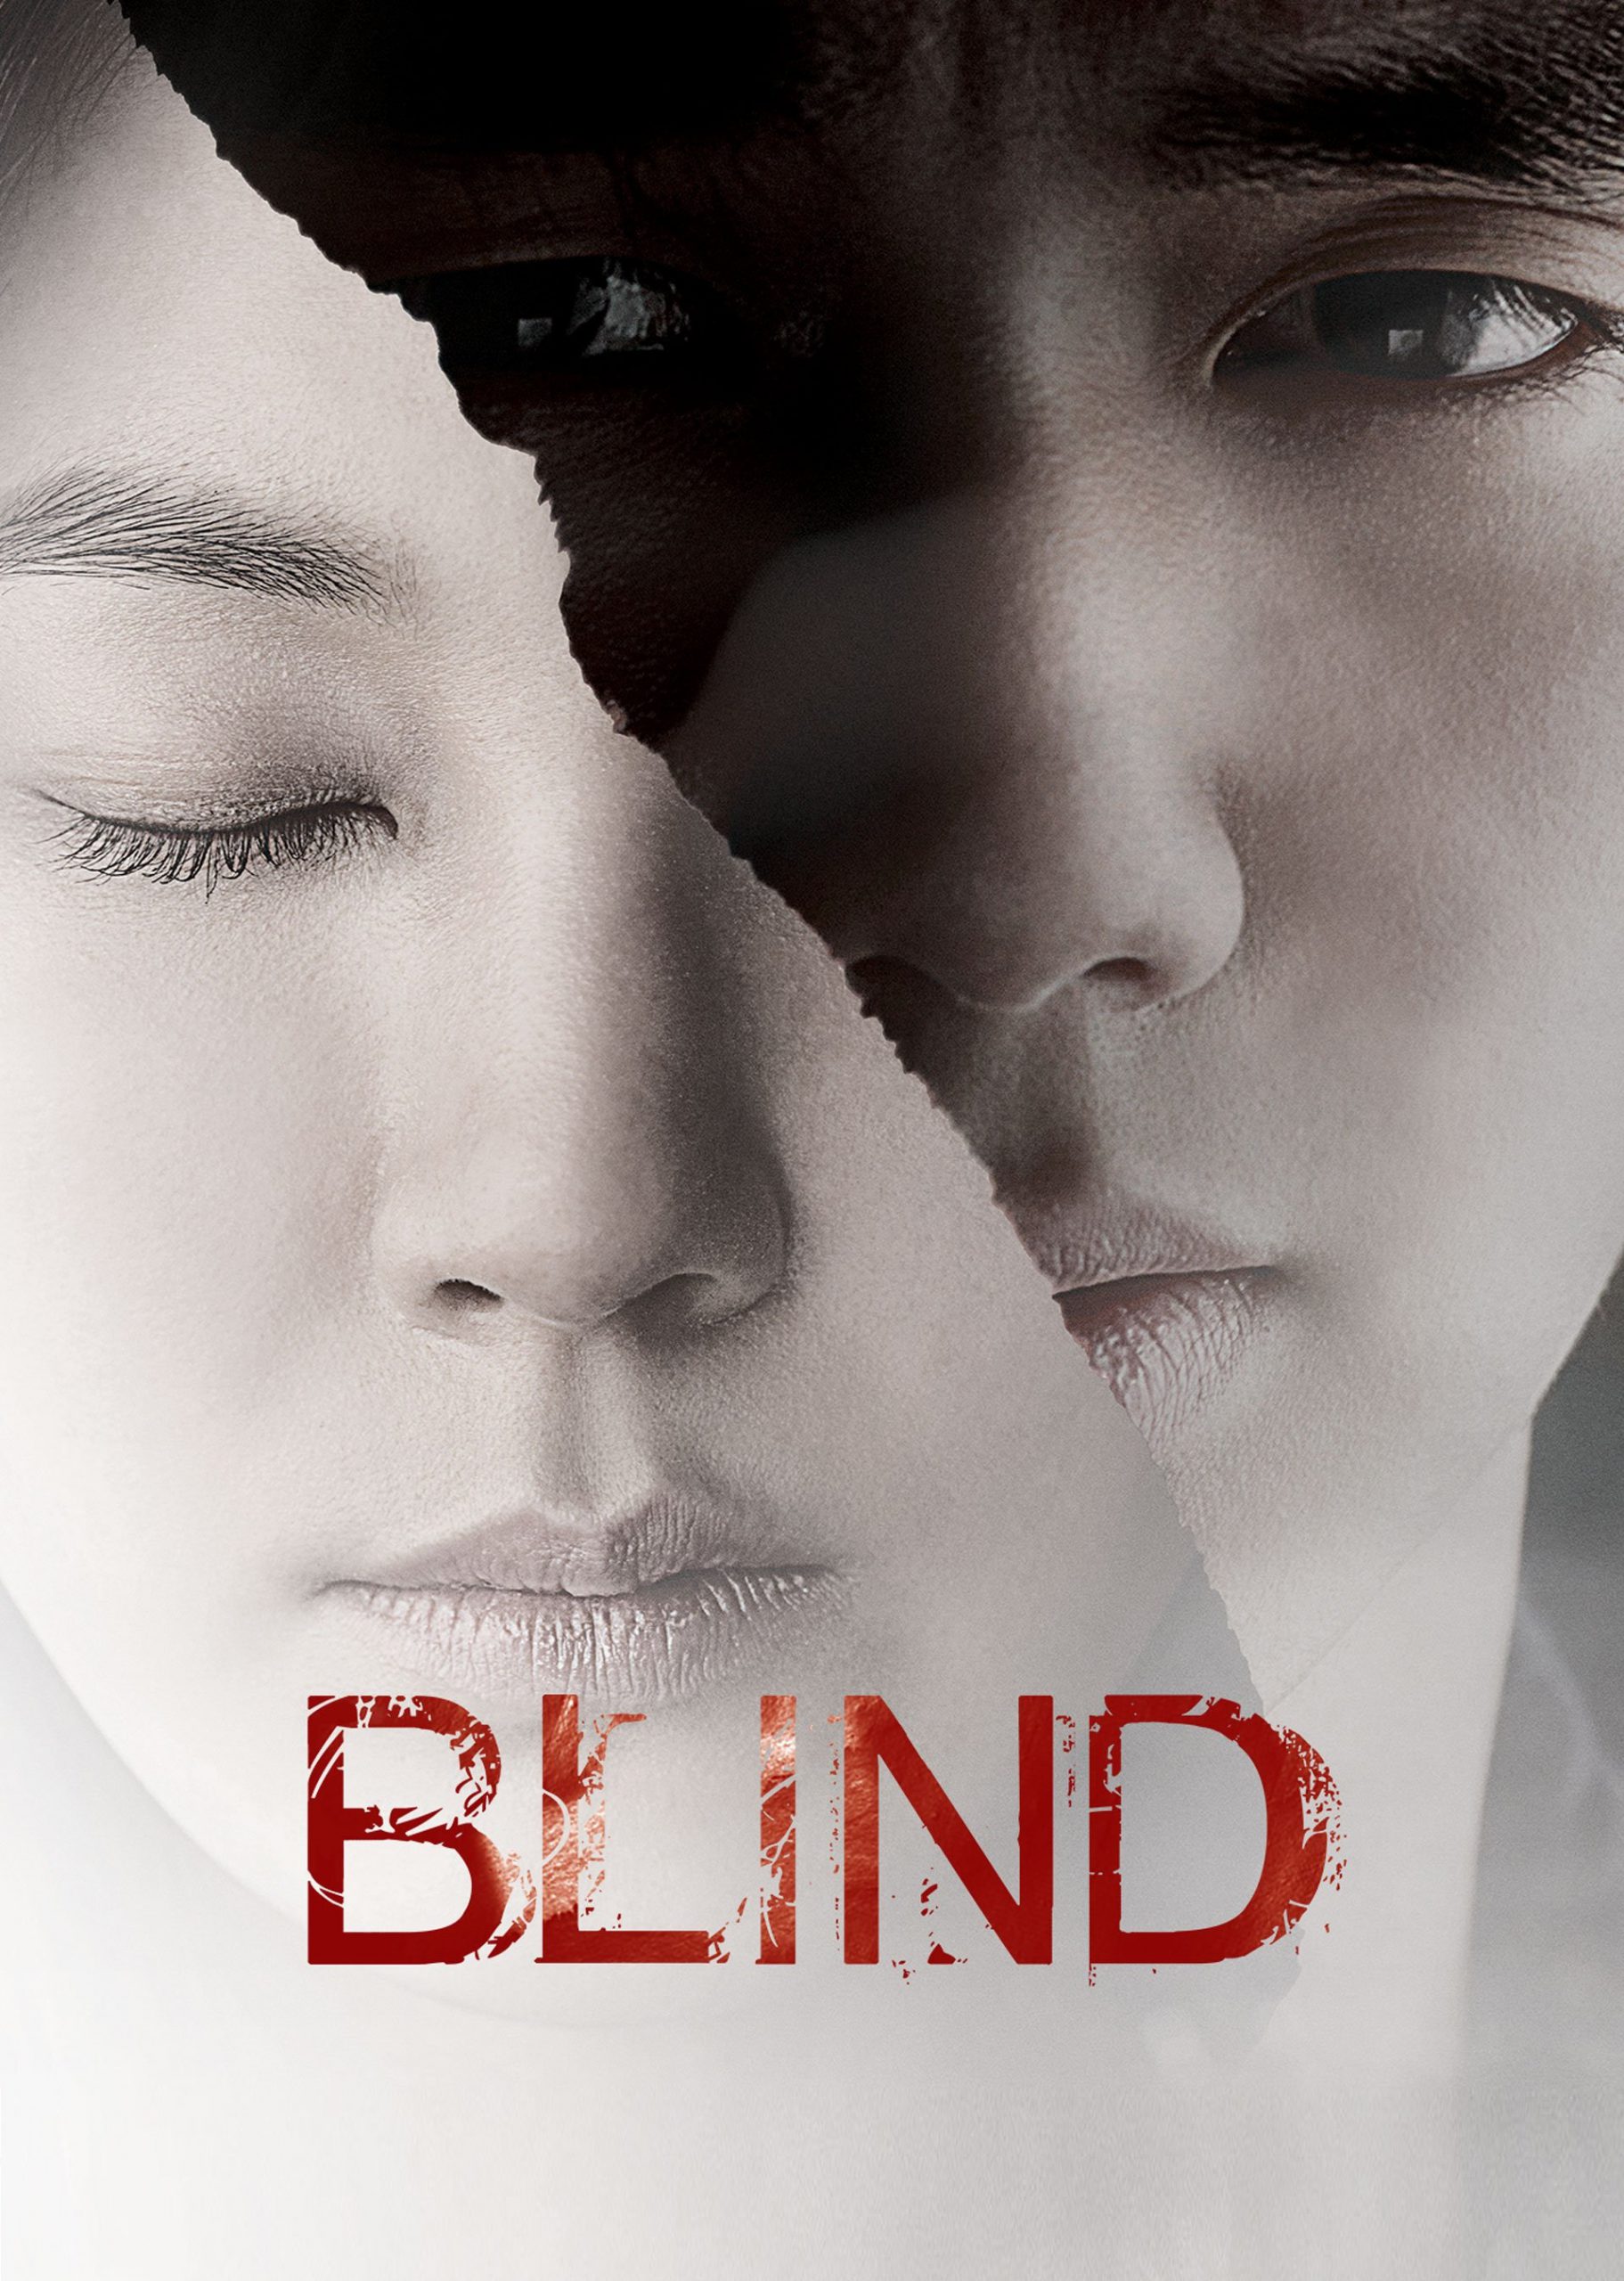 Blind [HD] (2011)